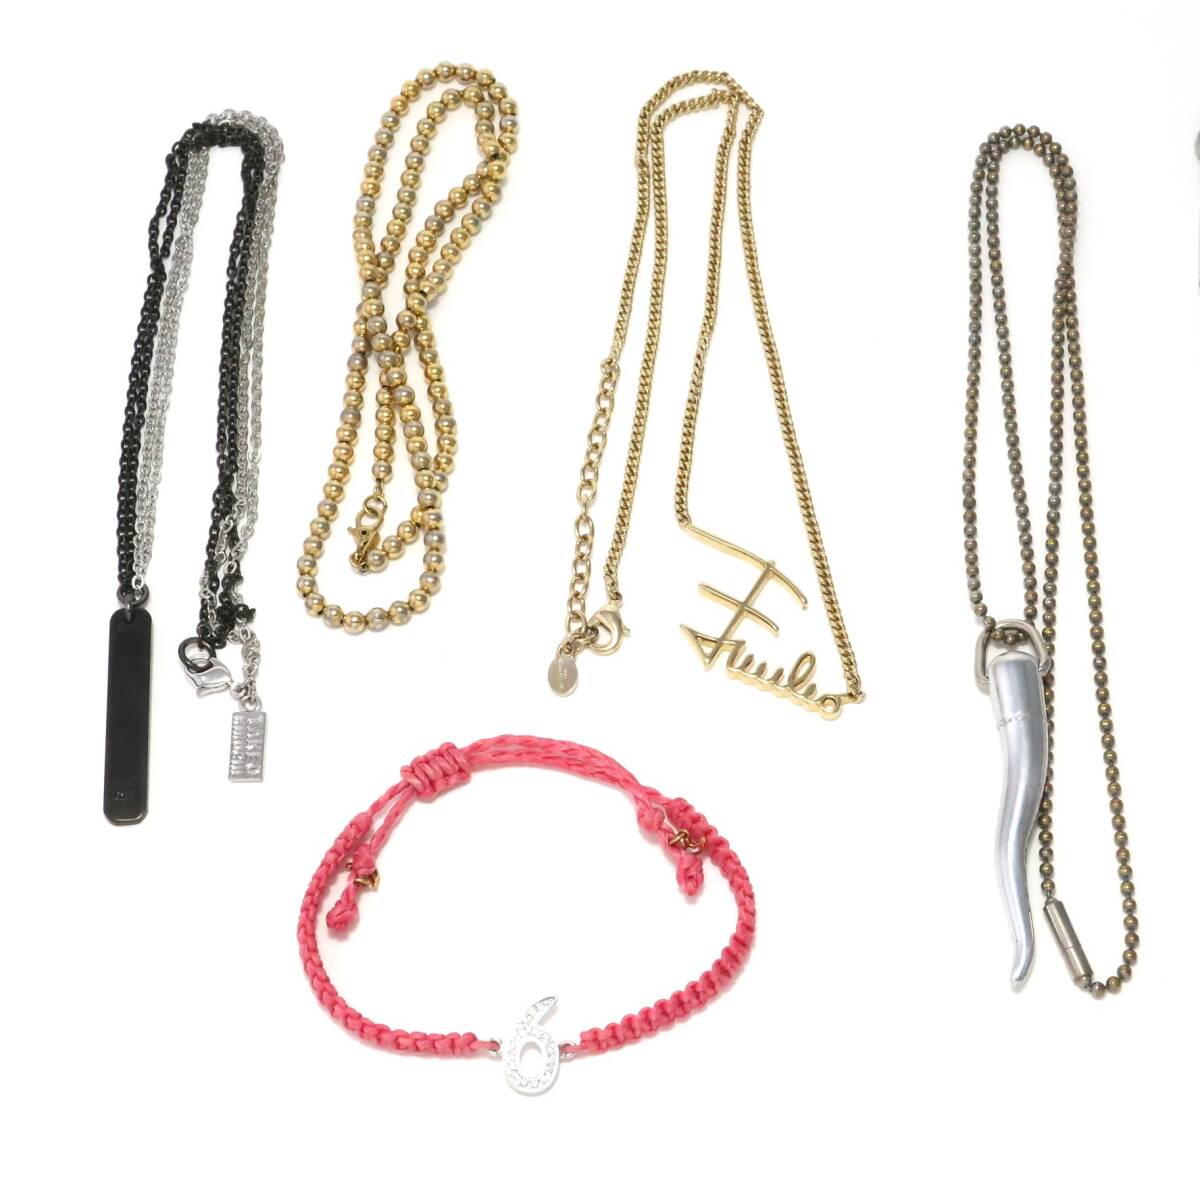  necklace bracele * Vivienne Westwood Emilio Pucci GaGa Milano Dolce & Gabbana other *8 point set summarize 